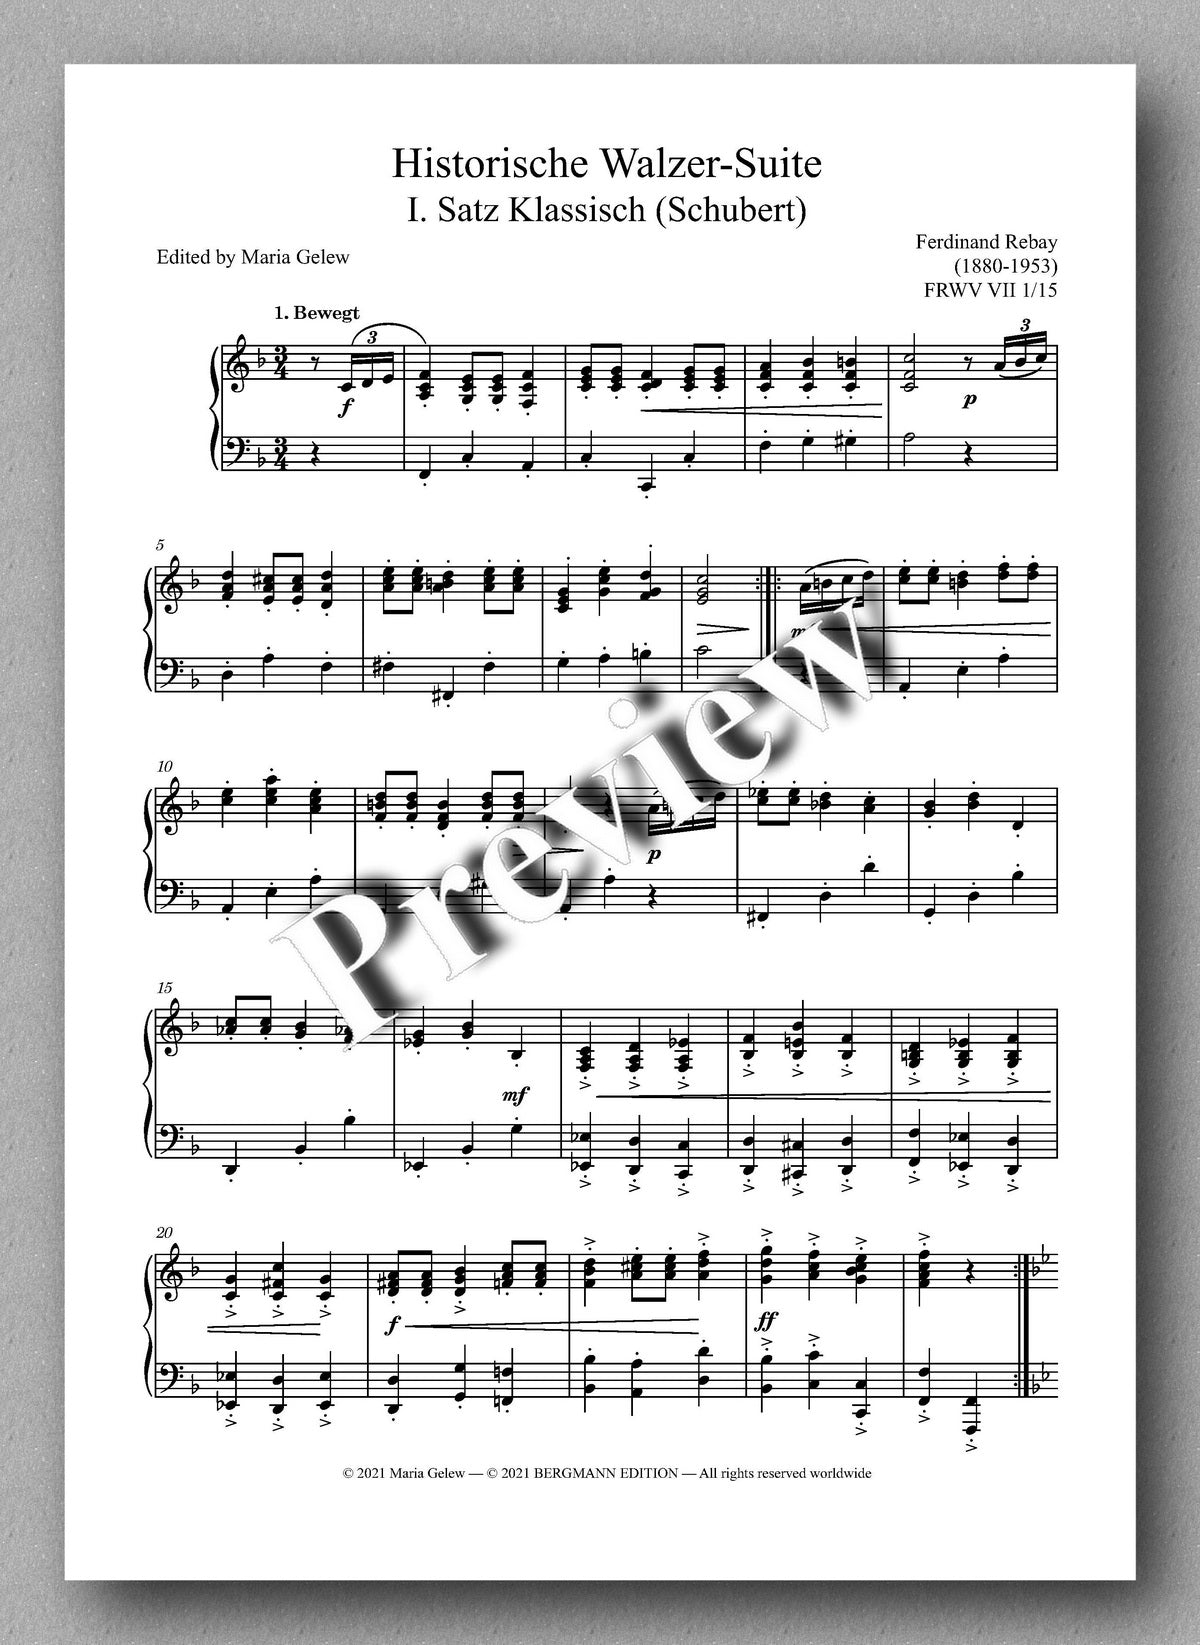 Rebay, Klavier No. 11, Historische Walzer-Suite - music score 1